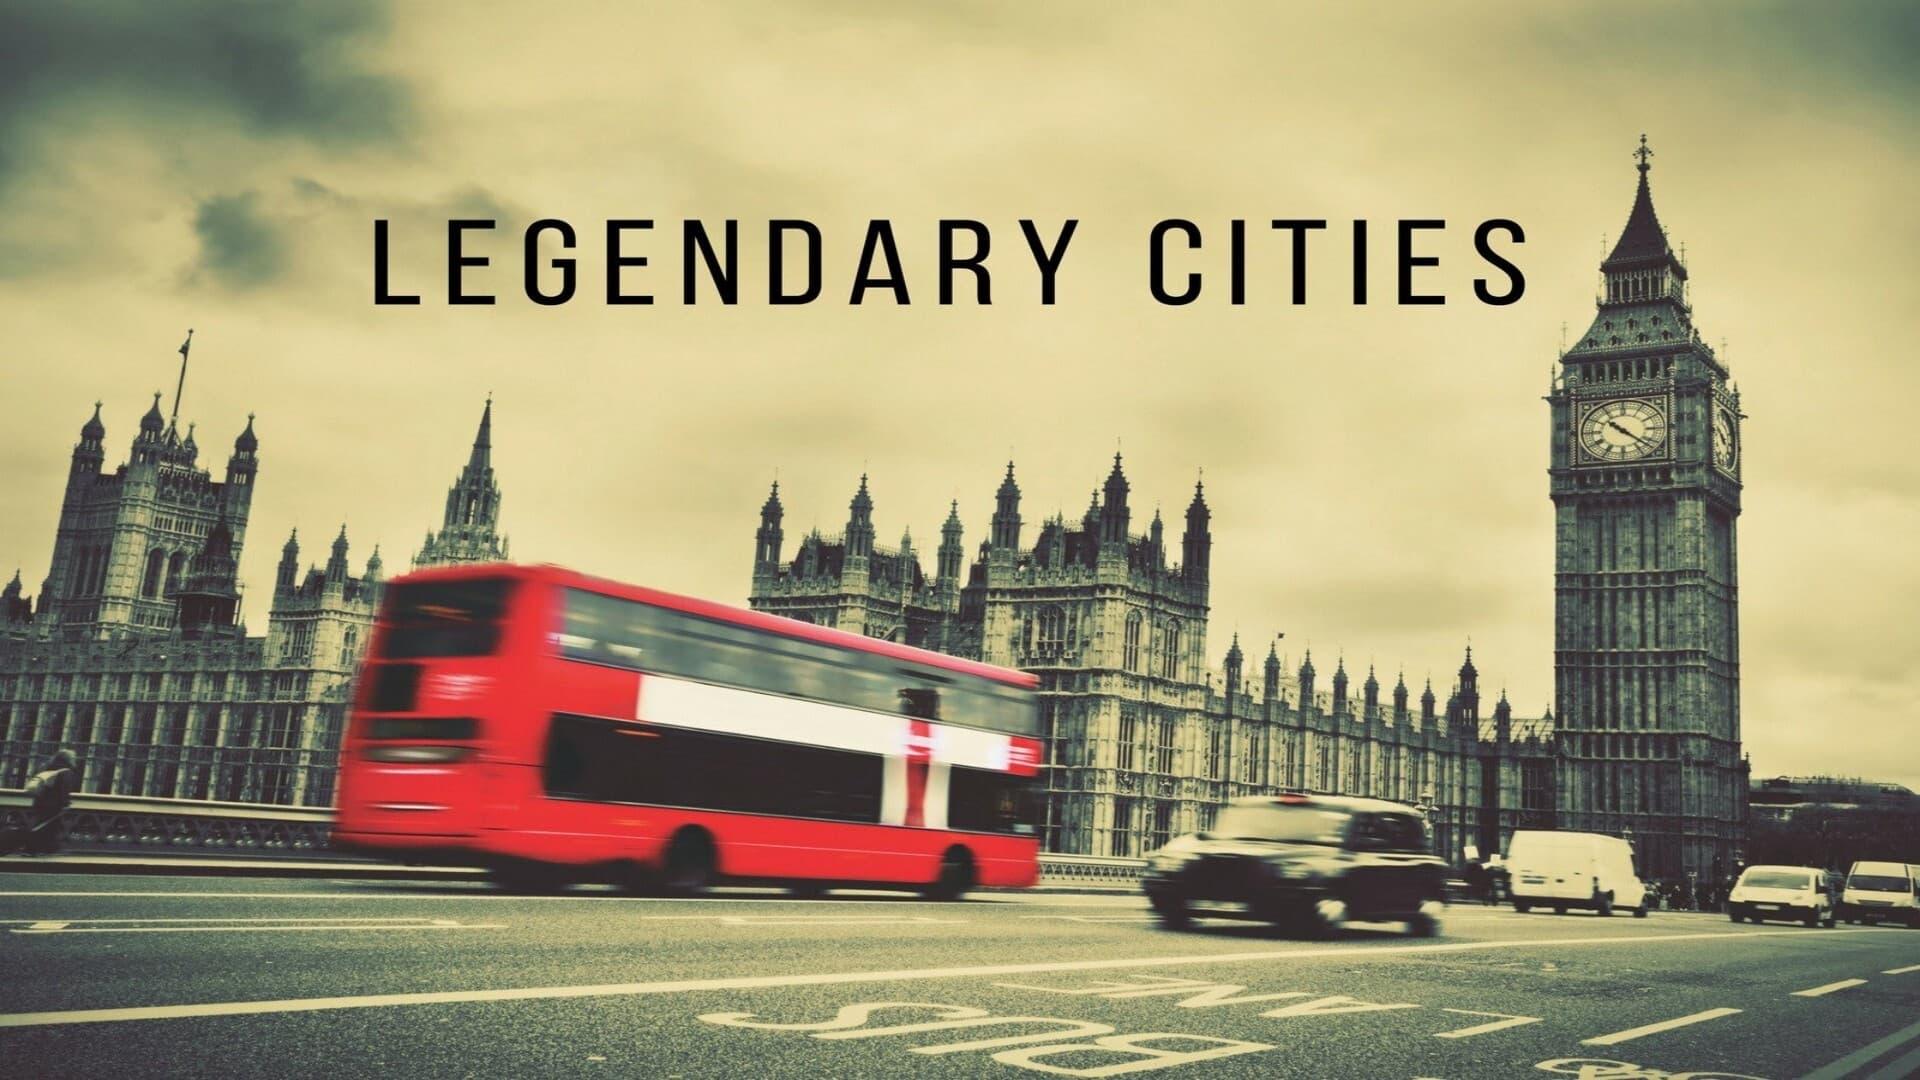 Legendary Cities backdrop